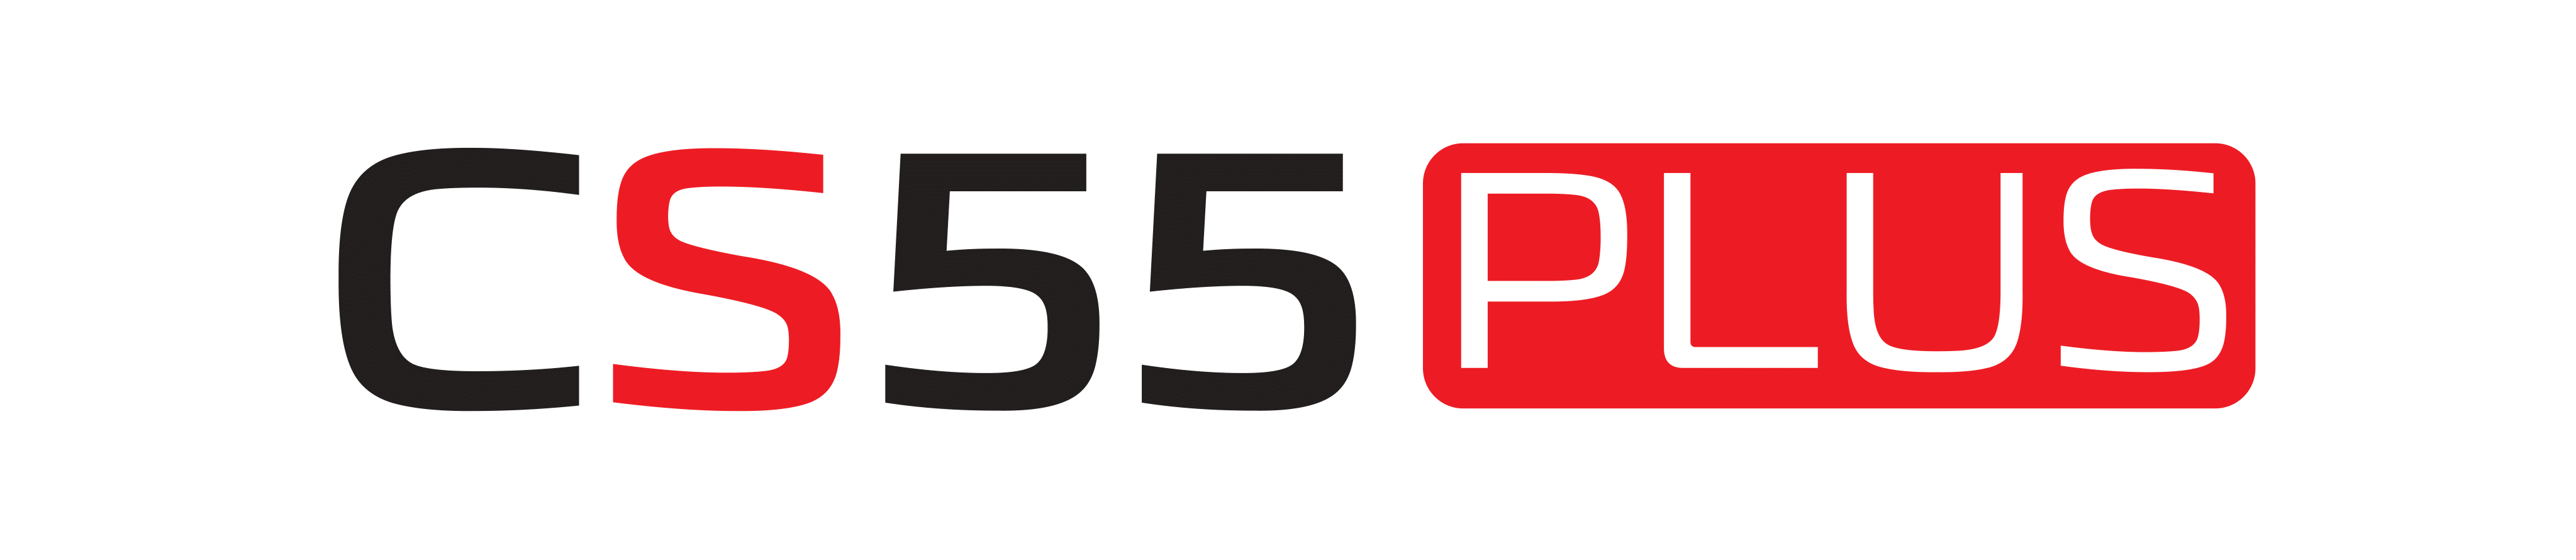 Логотип Changan CS55Plus>